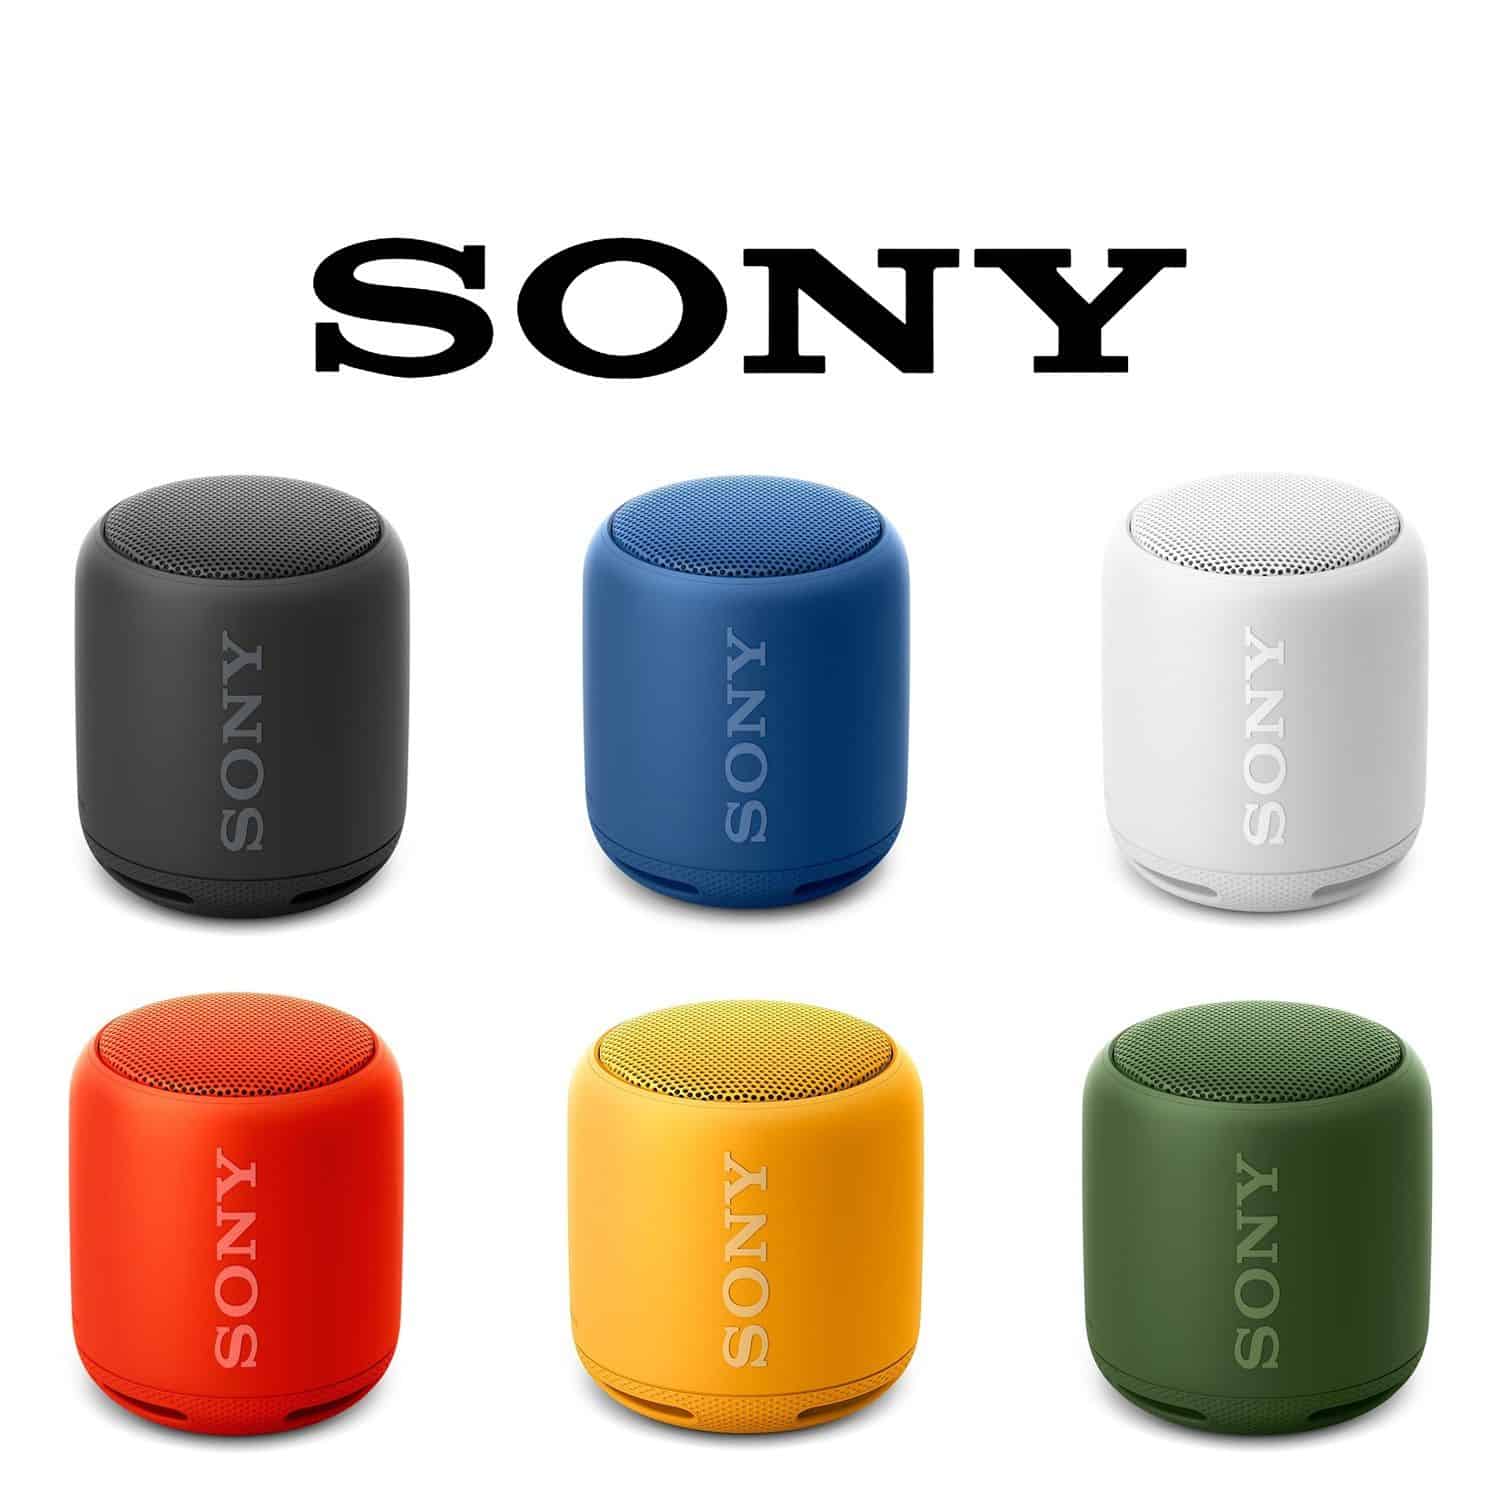 amazon Sony SRS XB10 reviews Sony SRS XB10 on amazon newest Sony SRS XB10 prices of Sony SRS XB10 Sony SRS XB10 deals best deals on Sony SRS XB10 buying a Sony SRS XB10 lastest Sony SRS XB10 what is a Sony SRS XB10 Sony SRS XB10 at amazon where to buy Sony SRS XB10 where can i you get a Sony SRS XB10 online purchase Sony SRS XB10 Sony SRS XB10 sale off Sony SRS XB10 discount cheapest Sony SRS XB10 Sony SRS XB10 for sale Sony SRS XB10 products Sony SRS XB10 tutorial Sony SRS XB10 specification Sony SRS XB10 features Sony SRS XB10 test Sony SRS XB10 series Sony SRS XB10 service manual Sony SRS XB10 instructions Sony SRS XB10 accessories altavoz sony srs xb10 avis sony srs xb10 altavoz sony srs xb10 opiniones altavoz sony srs xb10 amazon altavoz portátil sony srs-xb10 argos sony srs xb10 anleitung sony srs-xb10 altavoz portátil sony srs-xb10 extra bass y bluetooth opiniones altoparlante sony srs xb10 anker soundcore mini vs sony srs xb10 bocina sony srs xb10 boxa sony srs xb10 bluetooth lautsprecher sony srs xb10 bedienungsanleitung sony srs-xb10 buy sony srs xb10 bocina sony srs xb10 manual bluetooth sony srs-xb10 bluetooth speakers sony srs xb10 bán sony srs xb10 bán loa sony srs xb10 cassa sony srs xb10 caixa de som sony srs-xb10 caixa de som bluetooth sony srs-xb10 coluna sony srs xb10 cách sử dụng loa bluetooth sony srs-xb10 caixa de som sony srs-xb10 10w connecter sony srs xb10 conectar sony srs xb10 compare jbl go and sony srs xb10 cassa sony srs xb10 istruzioni danh gia sony srs-xb10 danh gia loa sony srs-xb10 darty sony srs xb10 download driver sony srs-xb10 drivers sony srs-xb10 driver sony srs-xb10 sony srs xb10 driver windows 7 loa không dây sony srs-xb10 enceinte sony srs xb10 enceinte bluetooth sony srs-xb10b enceinte sony srs xb10 avis emparejar sony srs xb10 enceinte sony srs xb10 notice eteindre sony srs xb10 ebay sony srs xb10 extra bass sony srs xb10 el corte ingles sony srs xb10 enceinte sony srs xb10 prix fnac sony srs xb10 fake sony srs xb10 fiche technique sony srs-xb10 sony srs-xb10 fiyat sony srs xb10 flipkart sony srs xb10 features sony srs xb10 full specification sony srs xb10 frequency response sony srs xb10 forum sony srs-xb10 firmware głośnik sony srs-xb10 głośnik sony srs-xb10 opinie giá loa sony srs xb10 gebruiksaanwijzing sony srs-xb10 glosnik sony srs xb10 instrukcja giá loa bluetooth sony srs-xb10 giá sony srs-xb10 sony srs-xb10 green sony srs xb10 user guide đánh giá sony srs xb10 how to pair sony srs xb10 harga sony srs xb10 how to charge sony srs xb10 how to switch off sony srs xb10 how to connect two sony srs xb10 handleiding sony srs-xb10 hướng dẫn sử dụng loa bluetooth sony srs xb10 how to open sony srs xb10 haut parleur bluetooth sony srs-xb10 how many watts is the sony srs xb10 istruzioni sony srs xb10 instrucciones sony srs-xb10 instrukcja obsługi sony srs-xb10 idealo sony srs xb10 instructions for sony srs-xb10 iphone sony srs xb10 is the sony srs xb10 waterproof sony srs xb10 inceleme sony srs-xb10 ile wat sony srs xb10 price in india jbl clip 2 or sony srs xb10 jual sony srs xb10 jbl go portable vs sony srs-xb10 jb hi fi sony srs xb10 jbl tune vs sony srs-xb10 jbl charge 2 vs sony srs xb10 john lewis sony srs xb10 jbl flip 2 or sony srs xb10 jbl go 2 sony srs xb10 jbl clip 2 o sony srs xb10 kaasaskantav juhtmevaba kõlar sony srs-xb10 sony srs xb10 koppeln sony srs xb10 kullanım kılavuzu sony srs xb10 koppelen sony srs xb10 kuantokusta sony srs-xb10 kaina sony srs-xb10 kaufen sony srs-xb10 kaiutin loa không dây srs-xb10 - km sony xa1 plus loa bluetooth sony srs-xb10 nguyen kim loa sony srs xb10 loa sony srs xb10 cũ loa bluetooth sony srs-xb10 - hàng chính hãng loa bluetooth sony srs-xb10 lazada loa bluetooth sony srs-xb10 tinhte loa bluetooth sony srs-xb10 review loa bluetooth sony srs-xb10 websosanh loa bluetooth sony srs-xb10 đánh giá mode d'emploi sony srs xb10 manuel sony srs xb10 media markt sony srs xb10 manual parlante sony srs-xb10 manuale sony srs-xb10 mua loa bluetooth sony srs-xb10 mua loa sony srs xb10 media expert sony srs-xb10 sony srs-xb10 moc sony srs xb10 mercado livre notice sony srs xb10 nfc sony srs xb10 sony srs xb10 not connecting sony srs-xb10 noir sony srs xb10 non si connette sony srs xb10 not connecting to iphone parlante portátil sony srs-xb10/bc ar negro sony srs-xb10 návod sony srs xb10 not working sony srs xb10 not charging opiniones sony srs xb10 officeworks sony srs xb10 sony srs-xb10 opinie sony srs-xb10 power output sony srs-xb10 output sony srs xb10 opladen sony srs xb10 sound output sony srs xb10 buy online sony srs xb10 olx parlante sony srs xb10 parlante portatil sony srs-xb10 parlante bluetooth sony srs-xb10 puissance sony srs xb10 parlante sony srs xb10 caracteristicas pair sony srs xb10 parlante sony srs-xb10 5w parlante portatil sony srs-xb10 potencia potencia sony srs xb10 sony srs xb10 price in qatar sony srs xb10 sound quality sony srs-xb10 quanti watt sony srs xb3 recensione review loa bluetooth sony srs-xb10 review loa sony srs-xb10 reviews sony srs-xb10 review sony srs xb10 indonesia recenze sony srs-xb10 reset sony srs xb10 sony srs xb10 recenzja sony srs-xb10 recenzia sony extra bass water-resistant bluetooth wireless speaker (srs-xb10) spesifikasi sony srs xb10 how to setup sony srs-xb10 scheda tecnica sony srs-xb10 sony altavoz portátil sony srs-xb10 extra bass y bluetooth speakers sony srs-xb10 sony srs-x11 vs sony srs-xb10 sony sony srs-xb10 sony srs-xb20 và srs-xb10 saturn sony srs xb10 speaker sony srs xb10 test enceinte sony srs xb10 treiber sony srs-xb10 test loa bluetooth sony srs-xb10 testbericht sony srs-xb10 tiempo de carga sony srs xb10 turn off sony srs xb10 test sony srs-xb10 đánh giá sony srs xb10 tinhte sony srs xb10 not connecting to laptop sony srs xb10 water test ue wonderboom vs sony srs-xb10 ue roll 2 vs sony srs xb10 unieuro sony srs xb10 ultimate ears wonderboom vs sony srs-xb10 sony ultra bluetooth speaker srs-xb10 sony srs xb10 uk sony ultra bluetooth speaker srs-xb10 review sony srs xb10 en ucuz sony ultra bluetooth speaker srs-xb10 black sony ultra portable bluetooth speaker srs-xb10 sony srs xb10 vs logitech x100 sony srs-xb10 vs anker soundcore 2 sony srs xb10 vs sony srs xb10 và xb11 philips bt50b vs sony srs-xb10 portronics sound drum vs sony srs xb10 logitech x50 vs sony srs xb10 jbl clip vs sony srs xb10 watt sony srs xb10 sony srs xb10 vatios wireless speakers sony srs-xb10 wattage of sony srs-xb10 wireless speaker sony srs xb10 sony extra bass srs-xb10 portable bluetooth wireless speaker sony srs xb10 portable wireless speakers sony srs-xb10 portable wireless speaker review sony srs-xb10 compact portable wireless speaker with extra bass sony xb10 trådlös högtalare srs-xb10 sony xb10 bærbar høyttaler srs-xb10 sony srs xb2 vs xb10 sony srs xb10 vs xiaomi sony srs-xb10b sony xb10 srs-xb10 youtube sony srs-xb10 sony srs xb10 yorum sony srs-xb10 portable bluetooth wireless speaker - yellow sony srs-xb10 compact portable wireless speaker with extra bass - yellow sony srs-xb10/yc sony extra bass srs-xb10 youtube sony srs-xb10 yellow altavoz portátil sony srs-xb10 extra bass y bluetooth sony srs-xb10 extra bass y bluetooth sony srs-xb10 zwart sony portable bluetooth zvučnik srs-xb10 sony srs-xb10 zoom sony bežični zvučnik srs xb10 sony srs-xb10 - zwart review sony srs xb10 zubehör sony srs-xb10 bluetooth speaker zwart sony srs xb10 zurücksetzen sony srs xb10 parowanie z komputerem đánh giá loa bluetooth sony srs-xb10 tinhte loa bluetooth sony srs-xb10 - màu đen sony srs-xb10 /bc 10w portable bluetooth speaker sony srs xb10 driver windows 10 sony srs-xb10 /lc 10w portable bluetooth speaker sony srs-xb10 10w sony srs xb10 windows 10 sony srs-xb10 10w portable bluetooth speaker sony srs xb10 vs boat stone 1000 caixa de som sony srs-xb10 10w branca caixa de som bluetooth sony srs-xb10 preto 10w rms sony srs xb10 2017 2. sony srs-xb10 how to pair 2 sony srs xb10 how to connect 2 sony srs xb10 sony srs xb10 và jbl charge 3 sony srs xb10 vs jbl flip 3 jbl flip 3 vs sony srs xb10 sony srs-xb10 và jbl flip 4 sony srs-xb10 4pda loa bluetooth sony srs-xb10 5w sony srs-xb10 5.0 sony srs-xb10 5w sony srs xb10 iphone 5s sony srs xb10 iphone 5 parlante sony srs-xb10 5w negro parlante sony srs-xb10 5w verde sony srs-xb10 5 w kablosuz hoparlör boat stone 600 vs sony srs xb10 sony srs xb10 iphone 6 sony srs xb10 vs boat stone 700 how to connect sony srs xb10 to windows 7 how to connect sony srs xb10 to iphone 7 sony srs xb10 windows 7 portronics por 871 vs sony srs xb10 sony srs xb10 iphone 8 how to pair a sony srs xb10 how to connect a sony srs-xb10 a sony srs-xb10 how to reset a sony srs-xb10 enceinte sony srs-xb10b enceinte bluetooth sony srs-xb10b watt test enceinte bluetooth sony srs-xb10b enceinte bluetooth sony srs-xb10b puissance sony srs xb10 mode d'emploi sony srs xb10 d&r sony speaker bluetooth srs-xb10/bc e black loa không dây sony srs-xb10/bc e sony srs-xb10/bc e caixa de som sony bluetooth e nfc 10w srs-xb10 sony srs-xb10g sony srs xb10 g.ce7 ソニー sony ワイヤレスポータブルスピーカー 重低音モデル srs-xb10 防水/bluetooth対応 グリーン srs-xb10 g sony srs-xb10 обзор sony srs xb10 l sony srs xb10 vs jbl go jbl go 2 o sony srs xb10 sony srs x11 o xb10 sony srs xb10 r ソニー sony ワイヤレスポータブルスピーカー 重低音モデル srs-xb10 防水/bluetooth対応 オレンジレッド srs-xb10 r sony srs-xb10 potencia w bluetooth sony srs-xb10/w sony srs-xb10 w ソニー sony ワイヤレスポータブルスピーカー 重低音モデル srs-xb10 防水/bluetooth対応 グレイッシュホワイト srs-xb10 w bocina sony srs-xb10/w blanca sony srs xb10 x jbl go sony srs xb10 iphone x sony srs-xb10 vs jbl sony srs-xb10 y altavoz portátil sony srs-xb10 extra bass y bluetooth amazon sony srs xb10 vs ue boom 2 sony srs-xb10 extra bass vs jbl flip 2 sony srs xb10 vs mi basic 2 sony srs xb10 vs flip 3 sony srs xb10 sony srs xb10 đánh giá sony srs xb10 tiki sony srs xb10 price sony srs xb10 pairing sony srsxb10b sony srs-xb10 watt sony srs-xb10 extra bass sony srs xb10 potencia sony srs xb10 amazon sony srs xb10 app sony srs xb10 argos sony srs xb10 audio wattage sony srs xb10 add sony srs xb10 aux sony srs xb10 android sony srs xb10 auto off sony srs xb10 aliexpress sony srs xb10 alexa sony srs xb10 bluetooth speaker sony srs xb10 battery replacement sony srs xb10 battery sony srs xb10 battery mah sony srs xb10 battery life sony srs xb10 bluetooth sony srs xb10 blue sony srs xb10 best buy sony srs xb10 black sony srs xb10 buy sony srs xb10 charging time sony srs xb10 case sony srs xb10 connect sony srs xb10 cover sony srs xb10 cheapest price sony srs xb10 currys sony srs xb10 cena sony srs xb10 connect to pc sony srs xb10 carry case sony srs xb10 connect to mac sony srs xb10 driver sony srs xb10 db sony srs xb10 dual sony srs xb10 disassembly sony srs xb10 dimensions sony srs xb10 details sony srs-xb10 dane techniczne sony srs-xb10 driver download sony srs xb10 darty sony srs xb10 extra bass sony srs xb10 ebay sony srs xb10 emag sony srs xb10 extra bass review sony srs-xb10 extra bass portable splash-proof wireless speaker sony srs-xb10 extra bass bluetooth hoparlör sony srs xb10 ekşi sony srs xb10 el corte ingles sony srs xb10 fiyat sony srs xb10 for sale sony srs xb10 fully charged sony srs xb10 fiche technique sony srs xb10 fnac sony srs xb10 falabella sony srs xb10 giá sony srs xb10 gebruiksaanwijzing sony srs xb10 good guys sony srs-xb10 groen sony srs xb10 gittigidiyor sony srs xb10 garbarino sony srs-xb10 geizhals sony srs xb10 gsmarena sony srs xb10 grey sony srs xb10 how many watts sony srs xb10 how to charge sony srs xb10 how to use sony srs xb10 harga sony srs xb10 how loud sony srs xb10 how to turn off sony srs xb10 harvey norman sony srs xb10 how to add speaker sony srs xb10 handleiding sony srs-xb10 hinta sony srs xb10 india sony srs xb10 iphone sony srs xb10 issues sony srs xb10 instructions sony srs xb10 istruzioni sony srs-xb10 instrukcja obsługi sony srs xb10 indonesia sony srs xb10 john lewis sony srs xb10 jb hi fi sony srs-xb10 jaka moc sony srs xb10 jbl clip 2 sony srs-xb10 jack sony srs-xb10 jbl sony srs xb10 jbl go sony srs xb10 jbl go 2 sony srs xb10 vs jbl sony srs-xb10 kopen sony srs xb10 kırmızı sony srs xb10 keeps turning off sony srs xb10 low volume sony srs xb10 lazada sony srs xb10 lesnumeriques sony srs xb10 lowest price sony srs xb10 launch date sony srs xb10 left right sony srs xb10 laden sony srs-xb10/lc sony srs-xb10 /lc portable bluetooth mobile/tablet speaker sony srs xb10 manual sony srs xb10 microphone sony srs xb10 mic sony srs xb10 mac sony srs xb10 macbook sony srs xb10 malaysia sony srs-xb10 mercadolibre sony srs xb10 nfc sony srs xb10 nz sony srs xb10 ndtv sony srs xb10 officeworks sony srs xb10 output sony srs xb10 online sony srs xb10 output power sony srs-xb10 opiniones sony srs-xb10 ohje sony srs-xb10 or jbl clip 2 sony srs xb10 price philippines sony srs xb10 price in pakistan sony srs xb10 price in bd sony srs xb10 price in sri lanka sony srs xb10 pret sony srs xb10 problems sony srs xb10 paytm sony srs xb10 review sony srs-xb10 recenze sony srs xb10 reviews sony srs-xb10/red portable wireless speaker sony srs xb10 review india sony srs xb10 recensione ita sony srs xb10 range sony srs xb10 speaker sony srs xb10 specs sony srs xb10 specifications sony srs xb10 speaker review sony srs xb10 stereo sony srs xb10 skipping sony srs xb10 setup sony srs xb10 size sony srs xb10 software sony srs-xb10 tinhte sony srs-xb10 teszt sony srs xb10 teknosa sony srs xb10 treiber sony srs xb10 teljesítmény sony srs xb10 troubleshooting sony srs-xb10 tragbarer sony srs xb10 technische daten sony srs-xb10 trovaprezzi sony srs xb10 unboxing sony srs xb10 usb driver sony srs xb10 user manual sony srs xb10 update sony srs xb10 unieuro sony srs-xb10 uk price sony srs xb10 umbenennen sony srs xb10 uitzetten sony srs xb10 usb sony srs xb10 vs jbl go 2 sony srs xb10 vs jbl clip 2 sony srs xb10 vs jbl flip 4 sony srs xb10 vs jbl clip 3 sony srs xb10 vs portronics sound drum sony srs xb10 vs bose soundlink micro sony srs xb10 vs jbl flip 2 sony srs xb10 vs sony srs x11 sony srs xb10 watts sony srs xb10 waterproof sony srs xb10 white sony srs xb10 wireless speaker sony srs xb10 warranty sony srs xb10 wattage sony srs xb10 walmart sony srs xb10 won't pair sony srs xb10 won't charge sony srs xb10 vs srs x11 sony srs xb10 yellow sony srs xb10 youtube caixa de som sony srs-xb10 10w azul